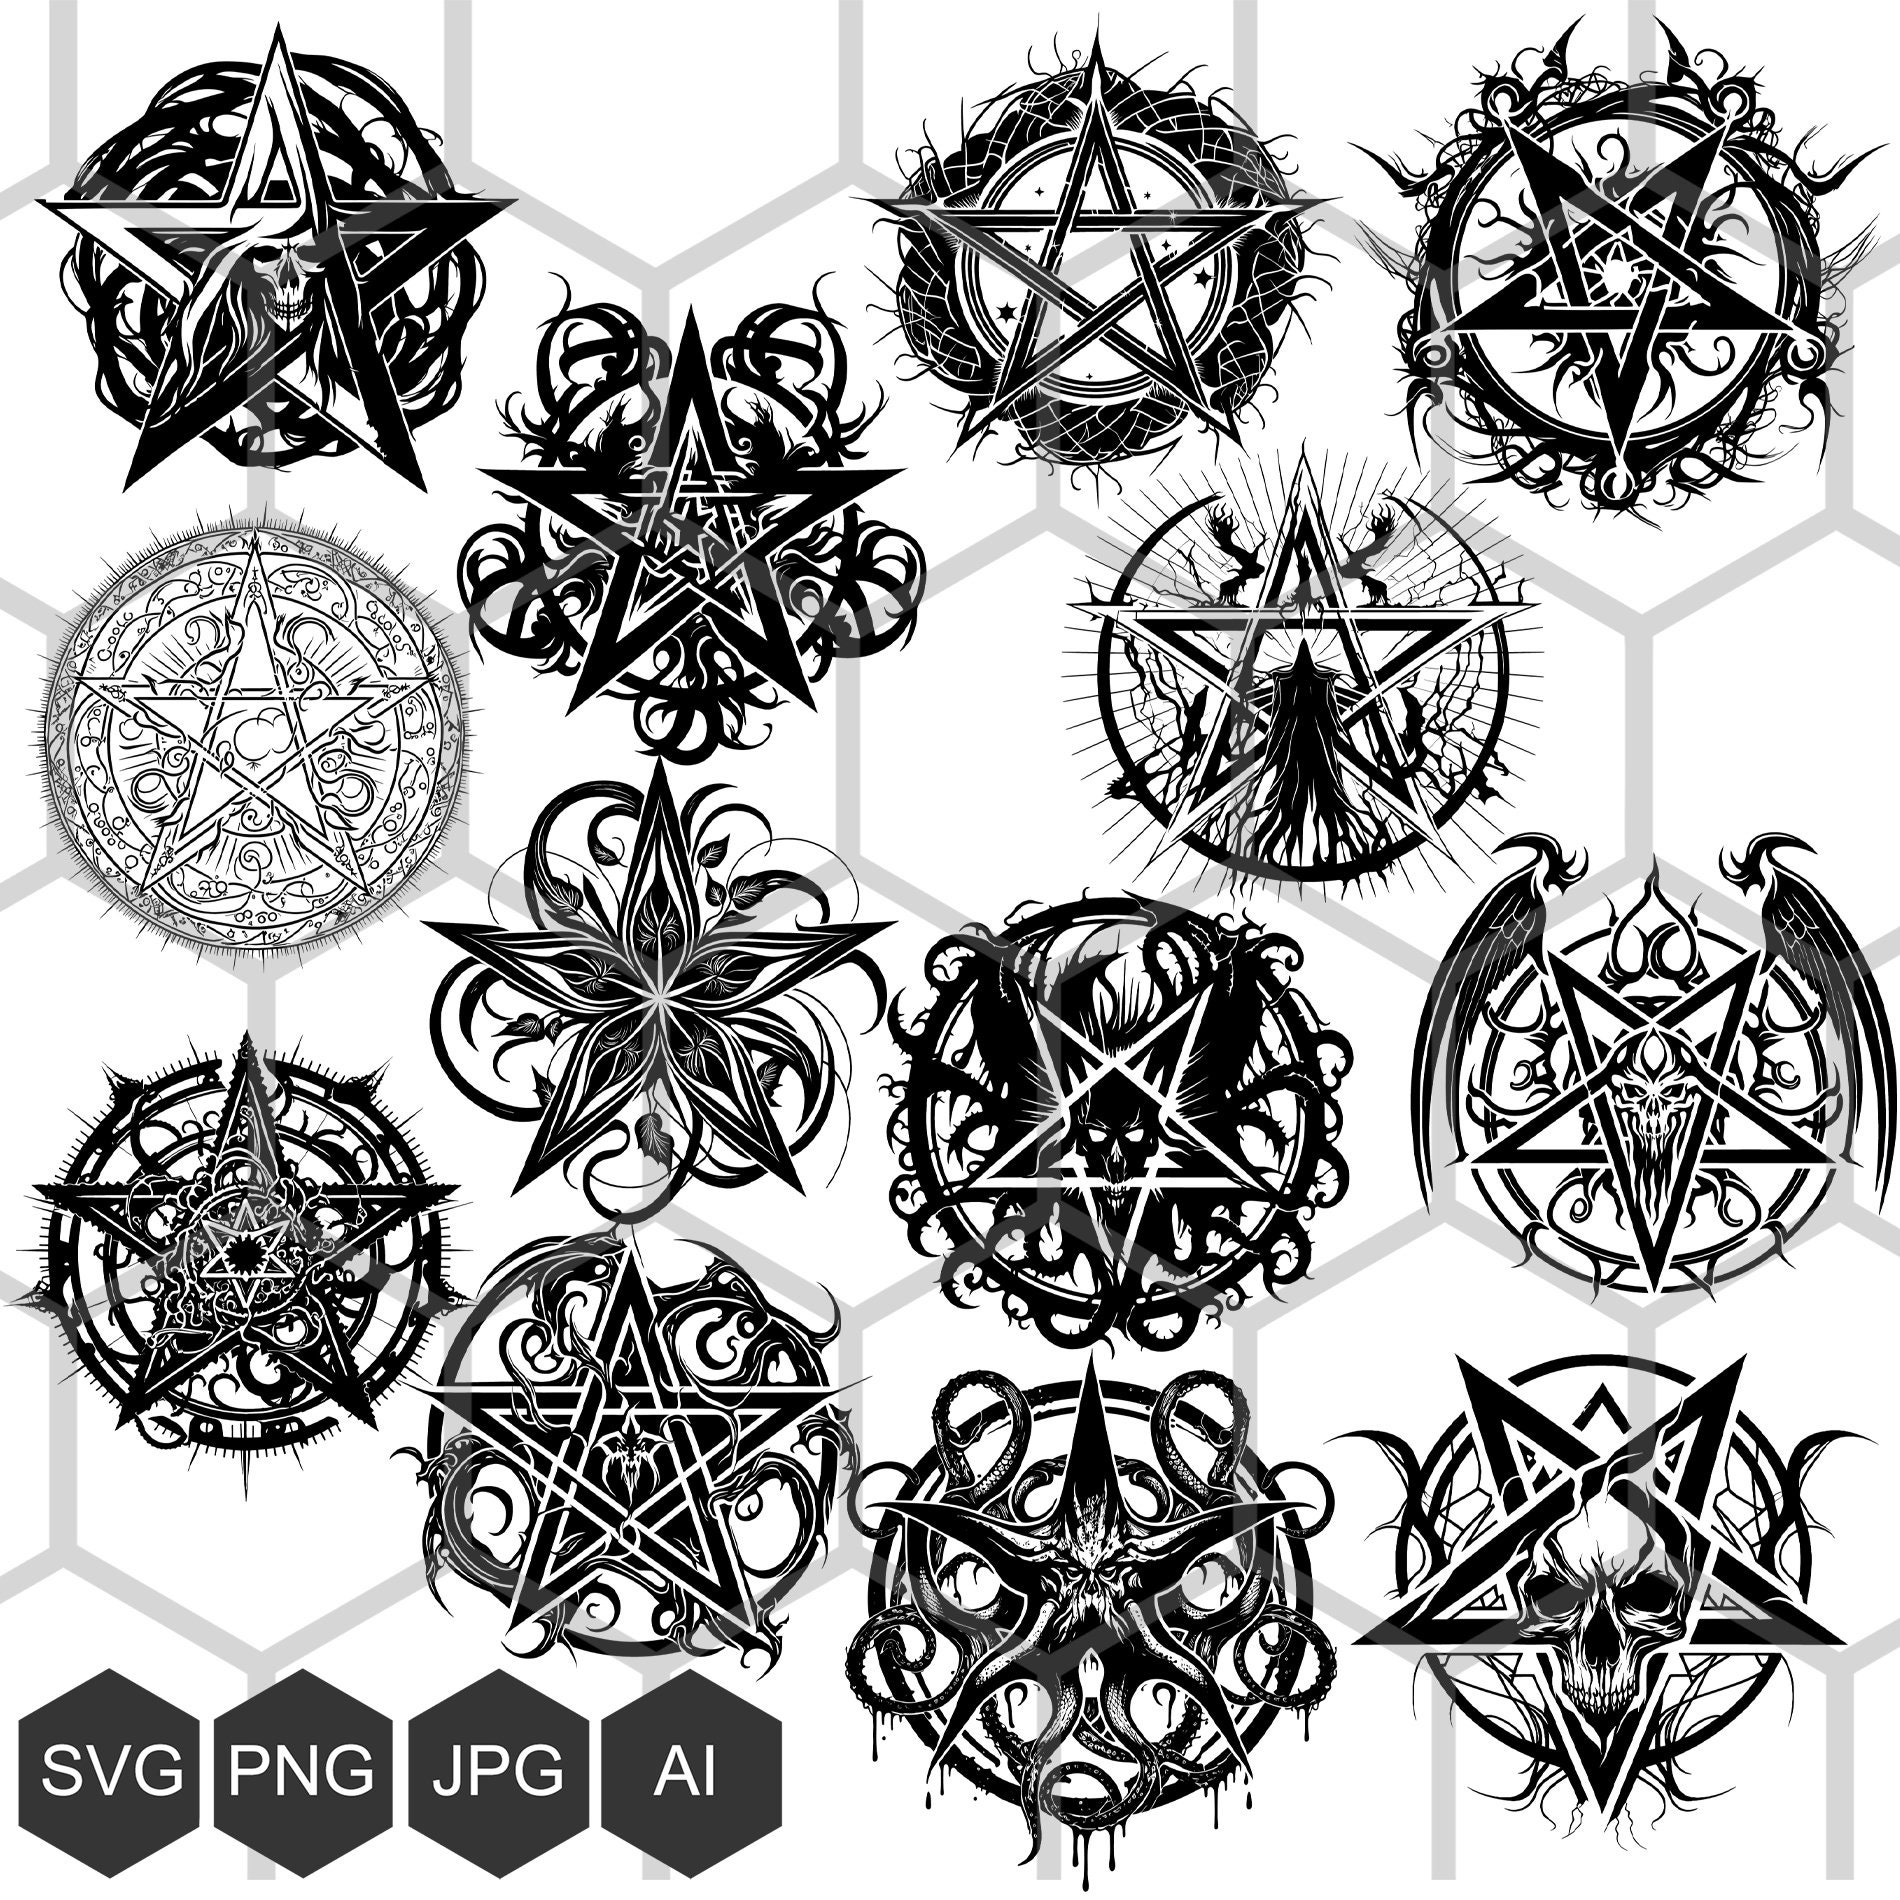 6-pointed star pentagram temporary tattoo wedding favors | eBay